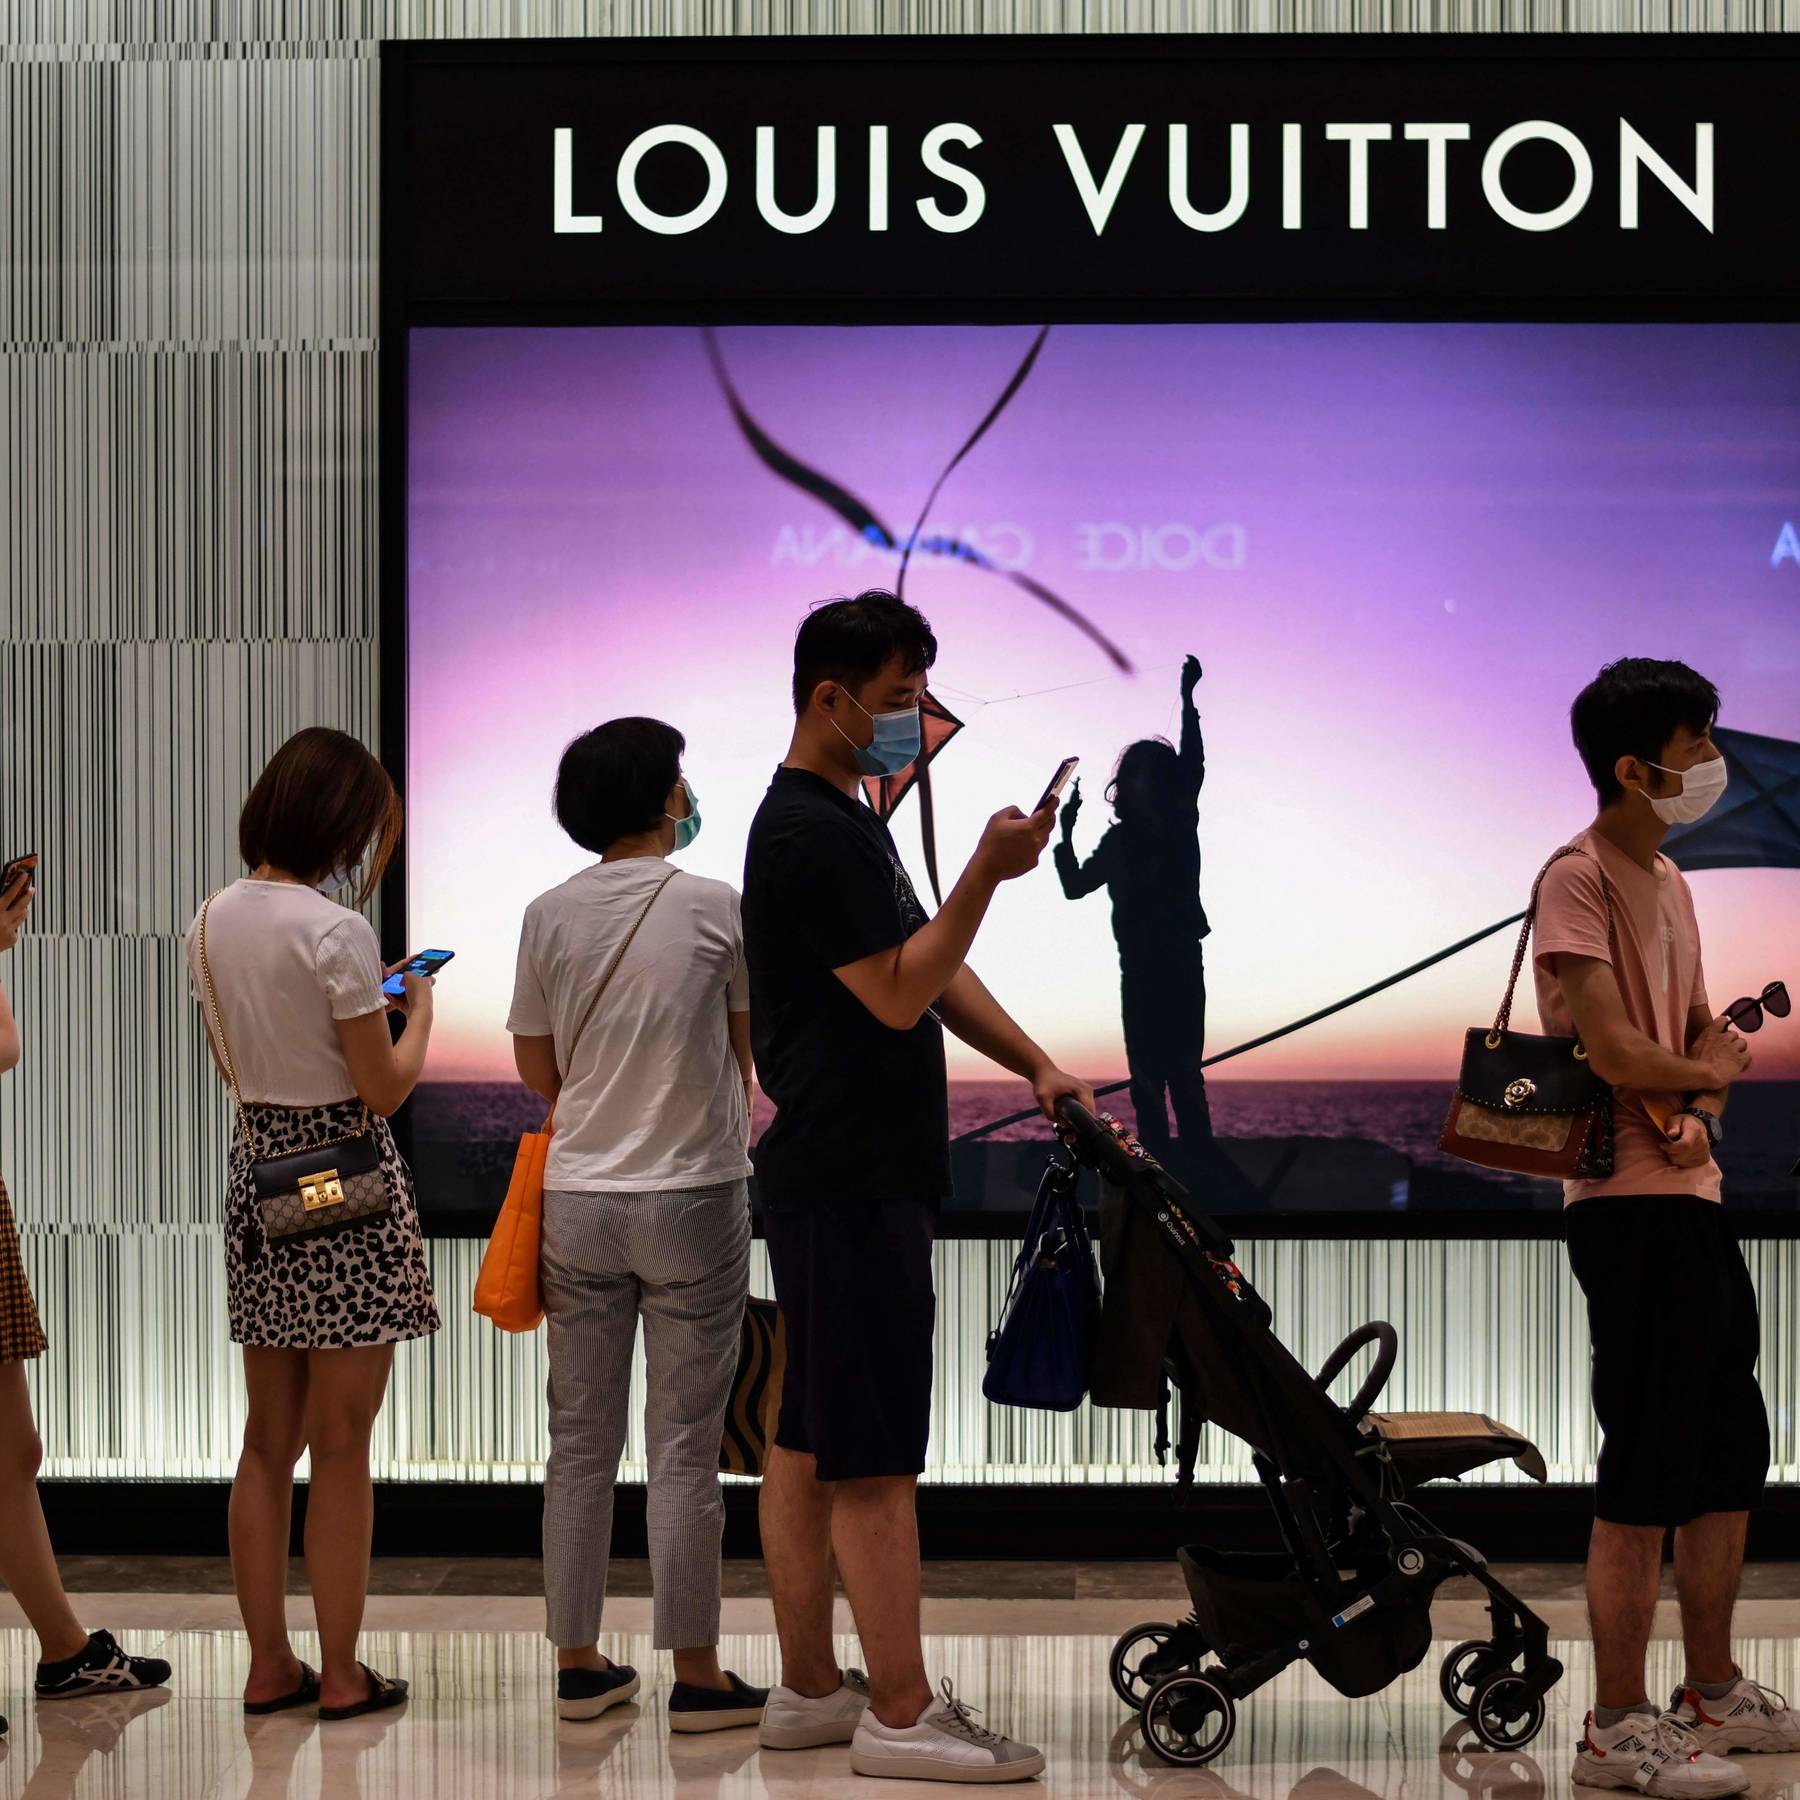 Louis Vuitton Raises Prices, So That's Awesome  Celebrity airport style, Louis  vuitton, Celebrity travel style